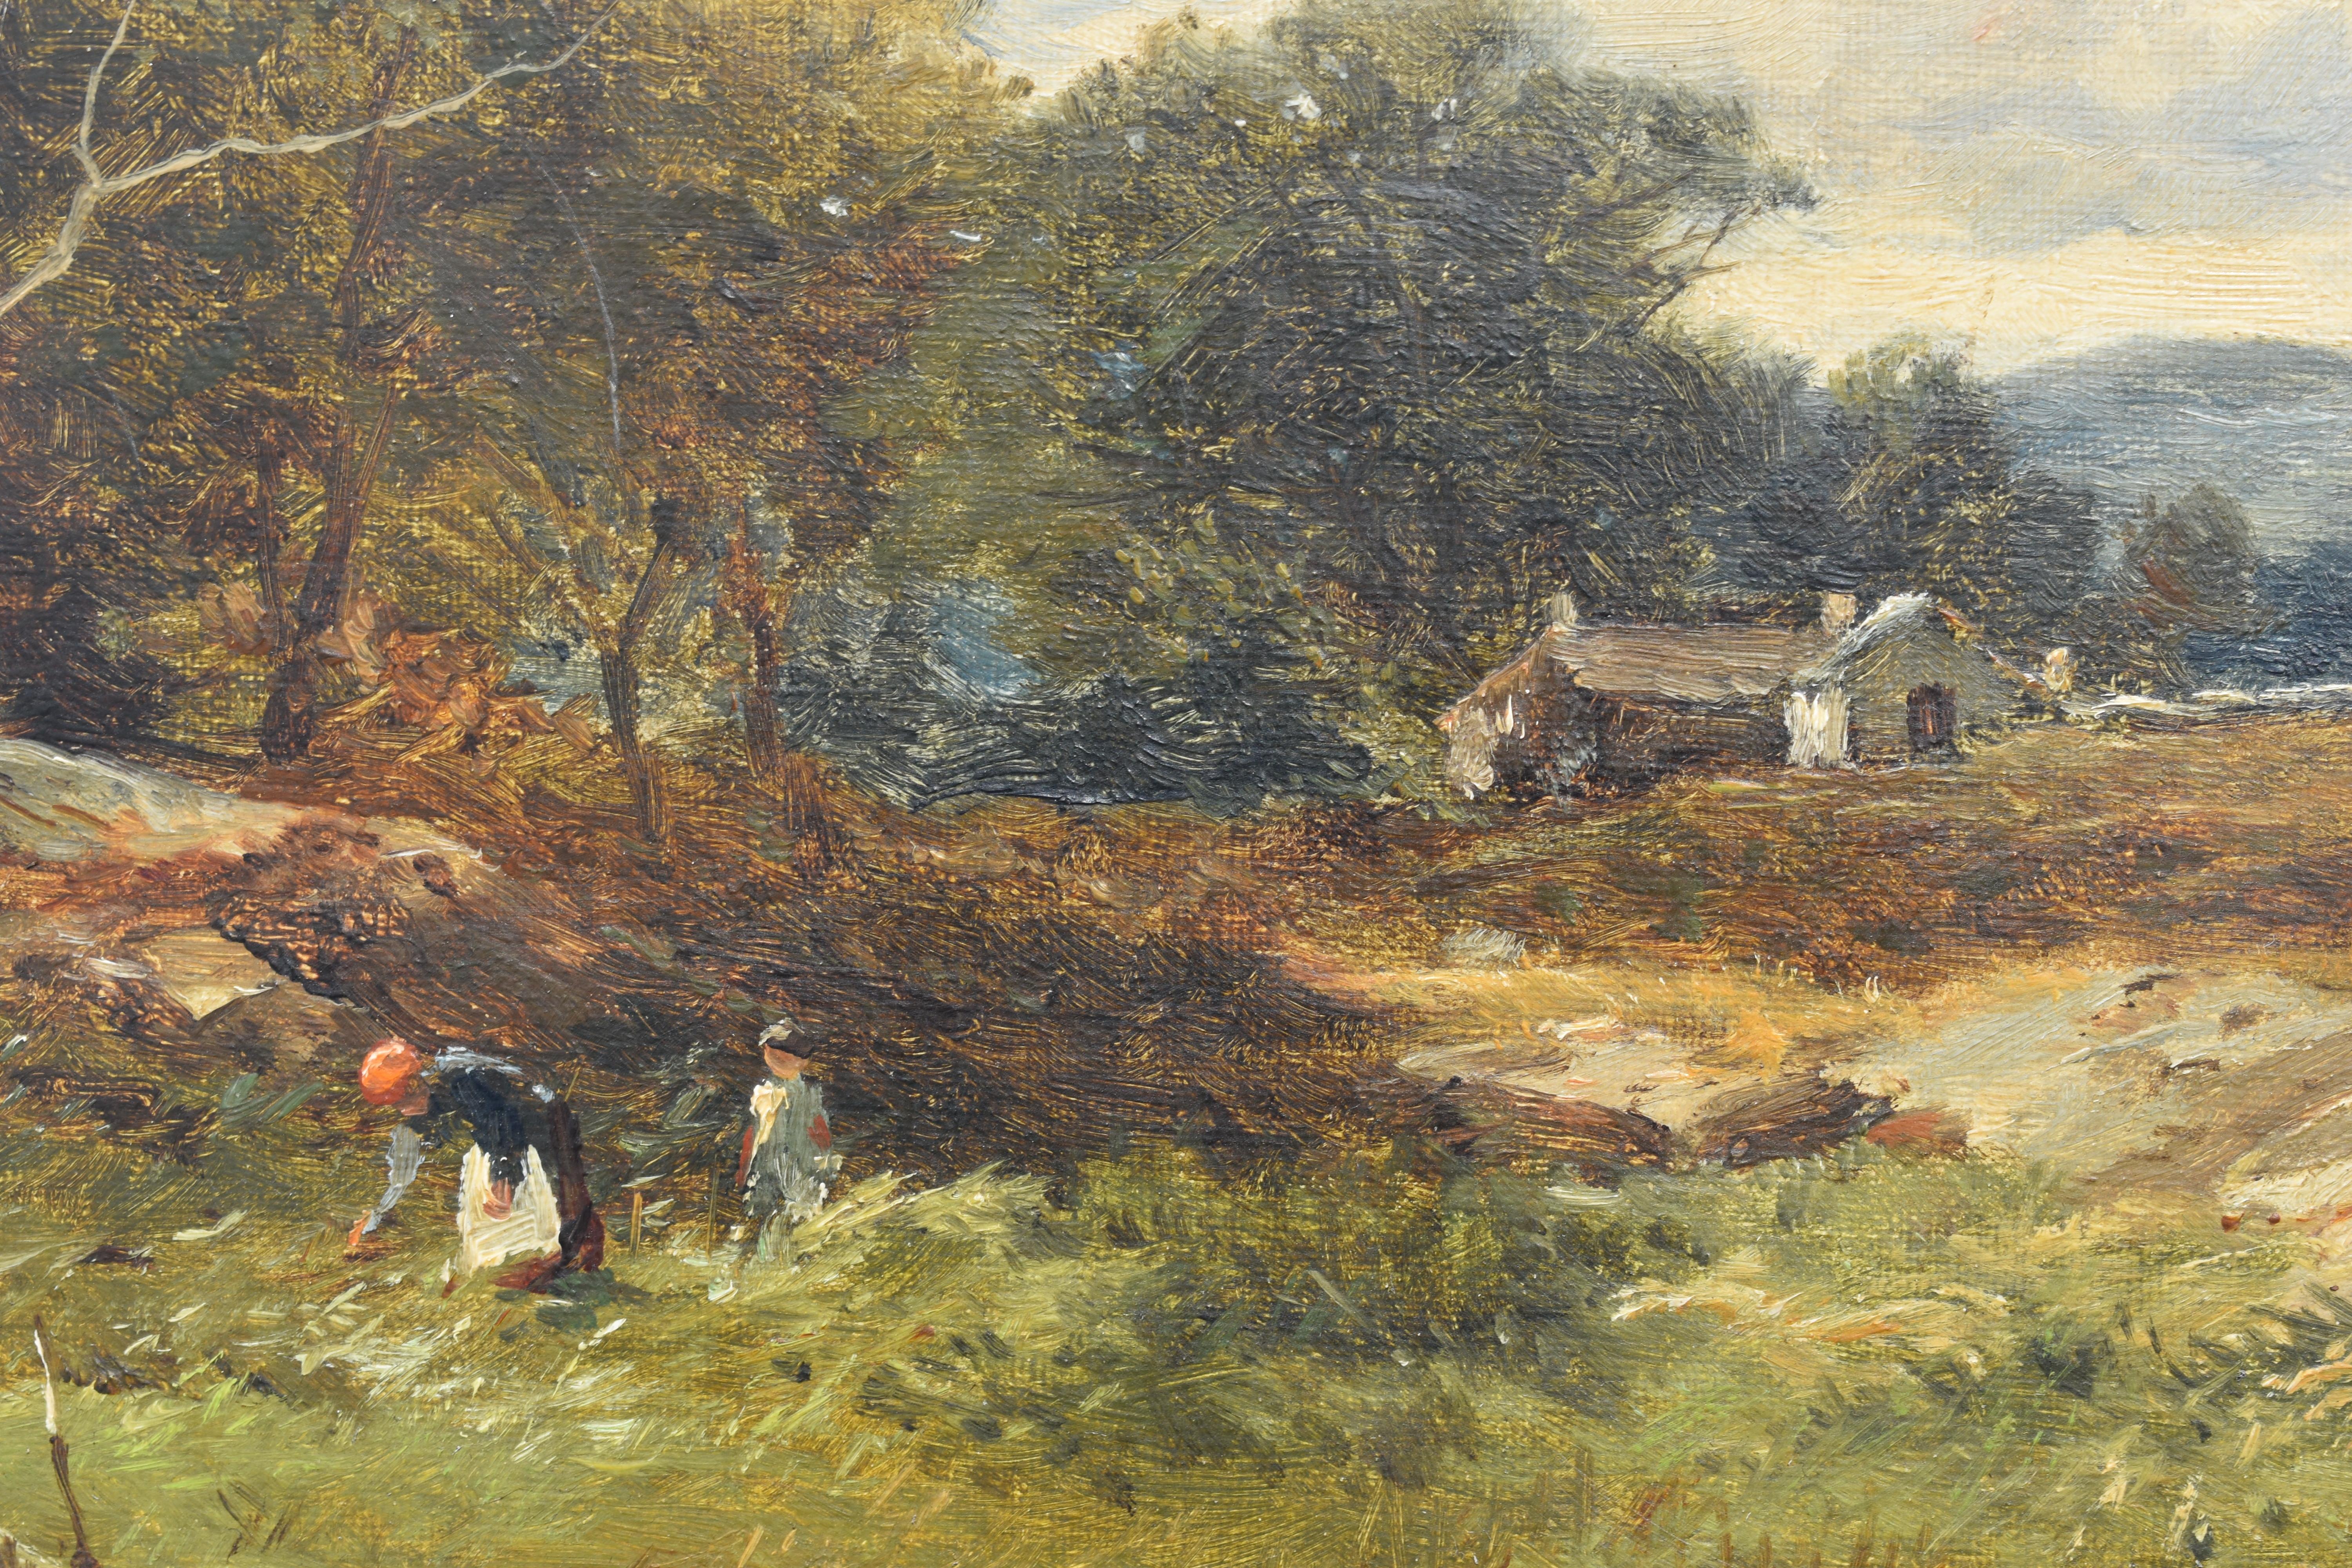 Capel Curig North Wales Landscape - Impressionist Painting by David Bates b.1840